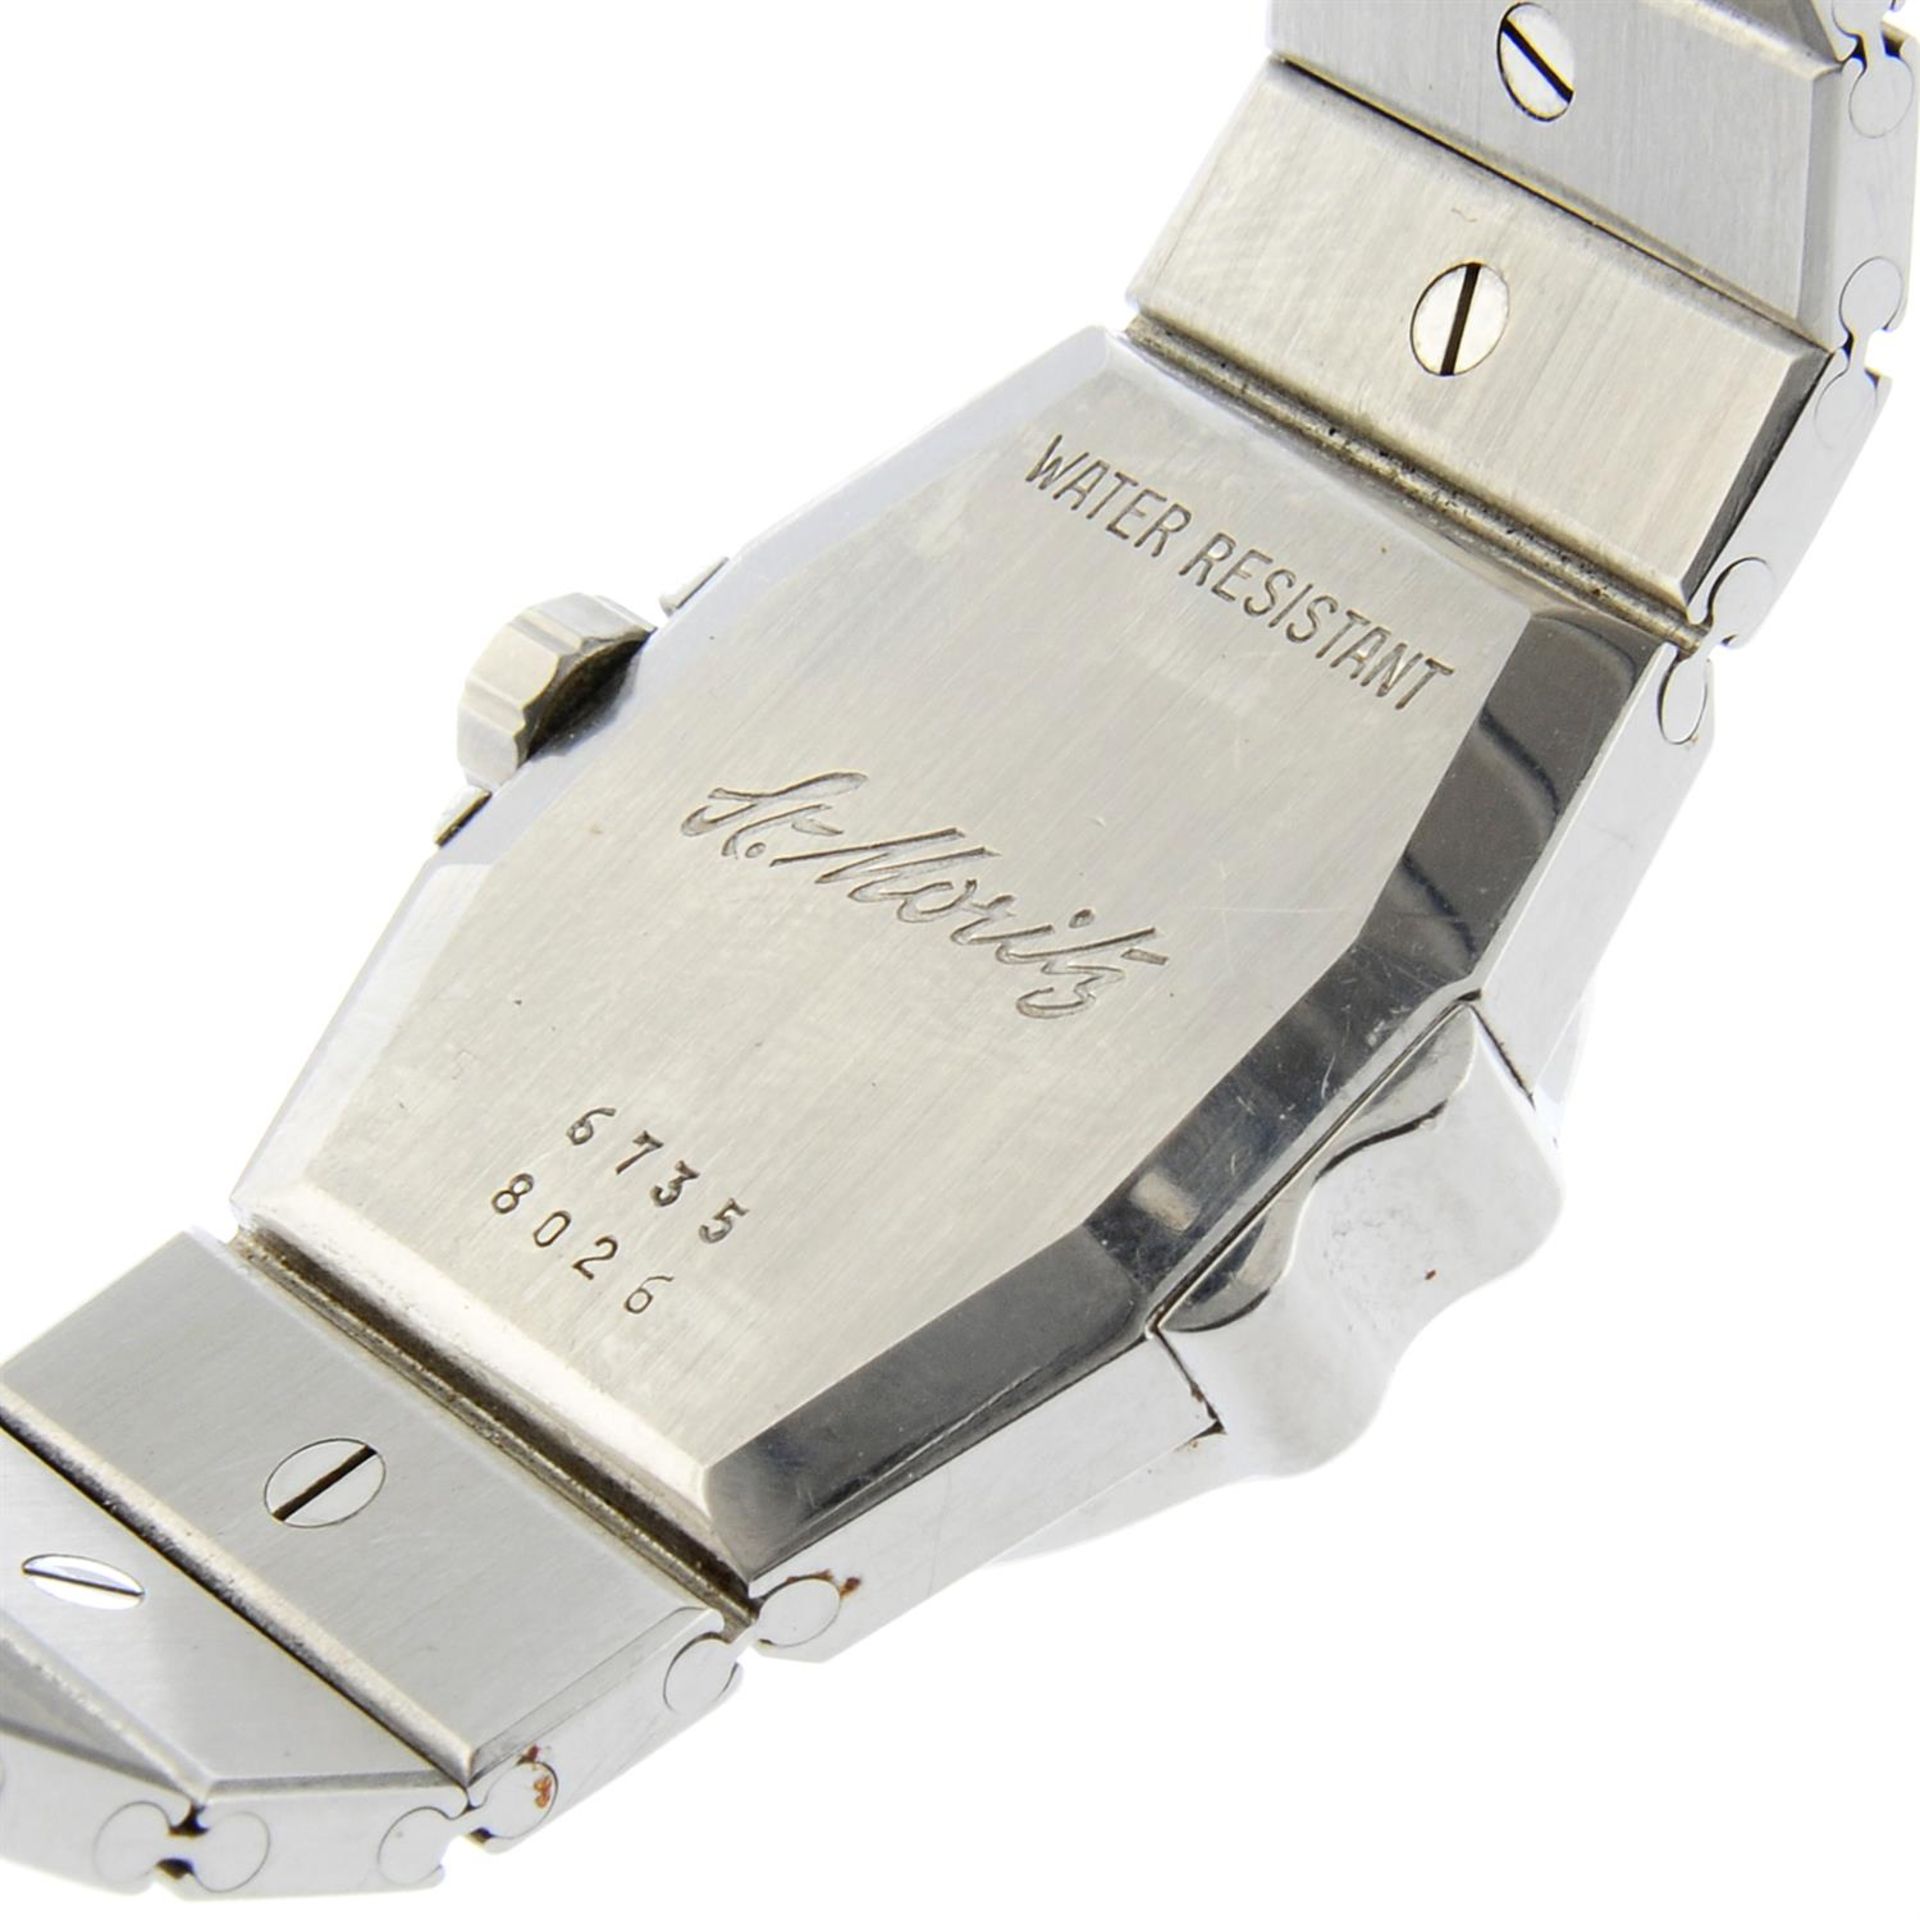 CHOPARD - a stainless steel St Moritz bracelet watch, 22mm. - Image 4 of 4